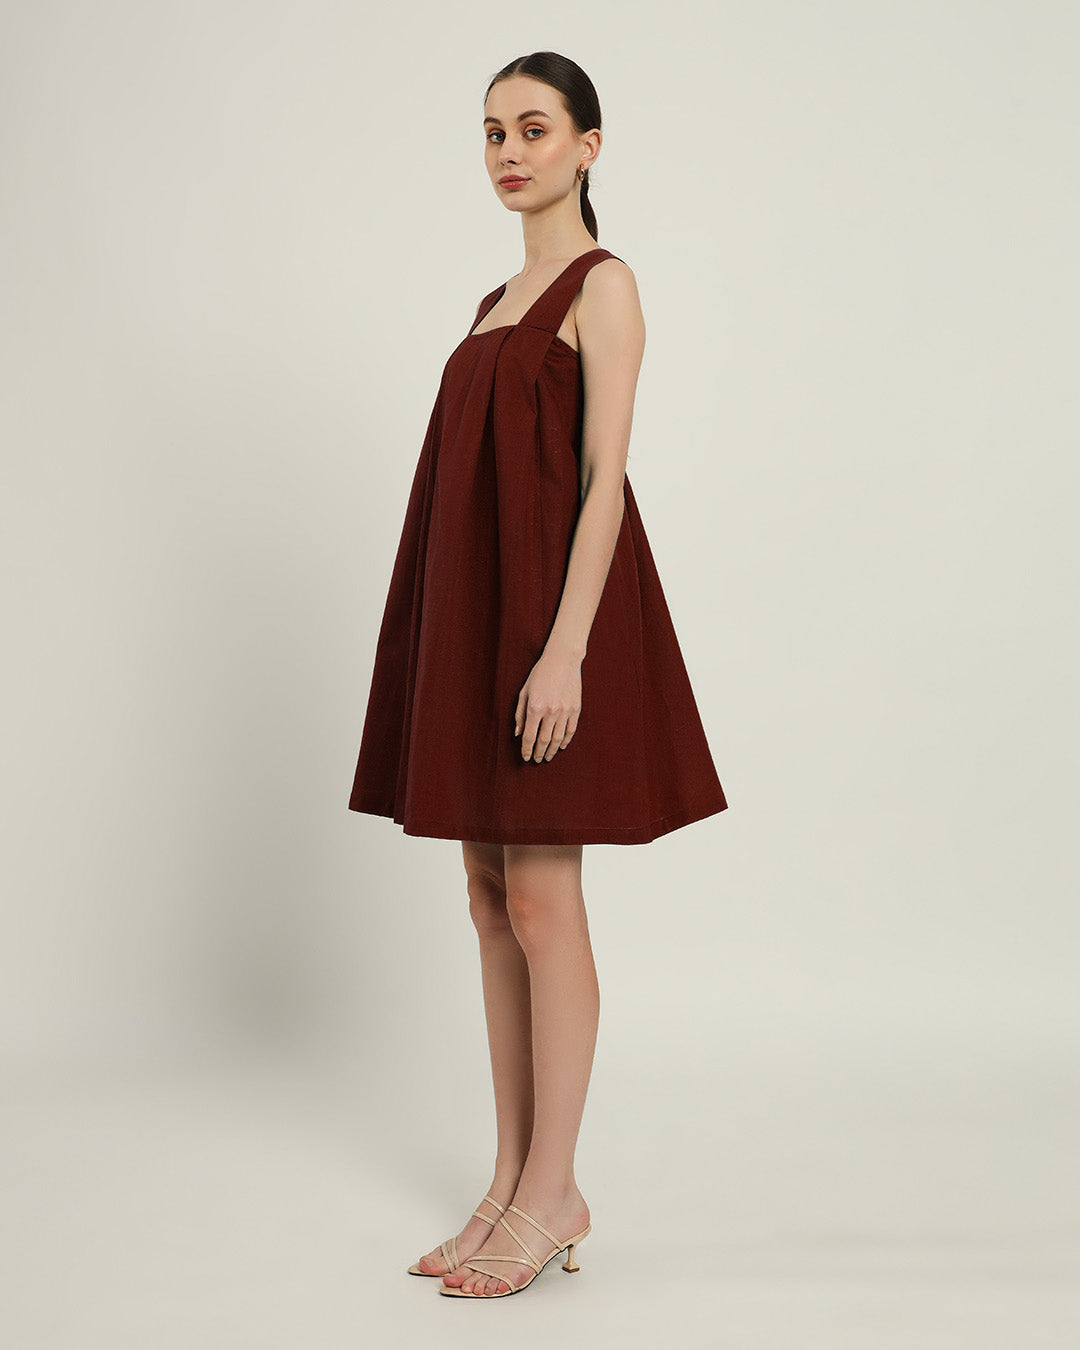 The Larissa Rouge Cotton Dress